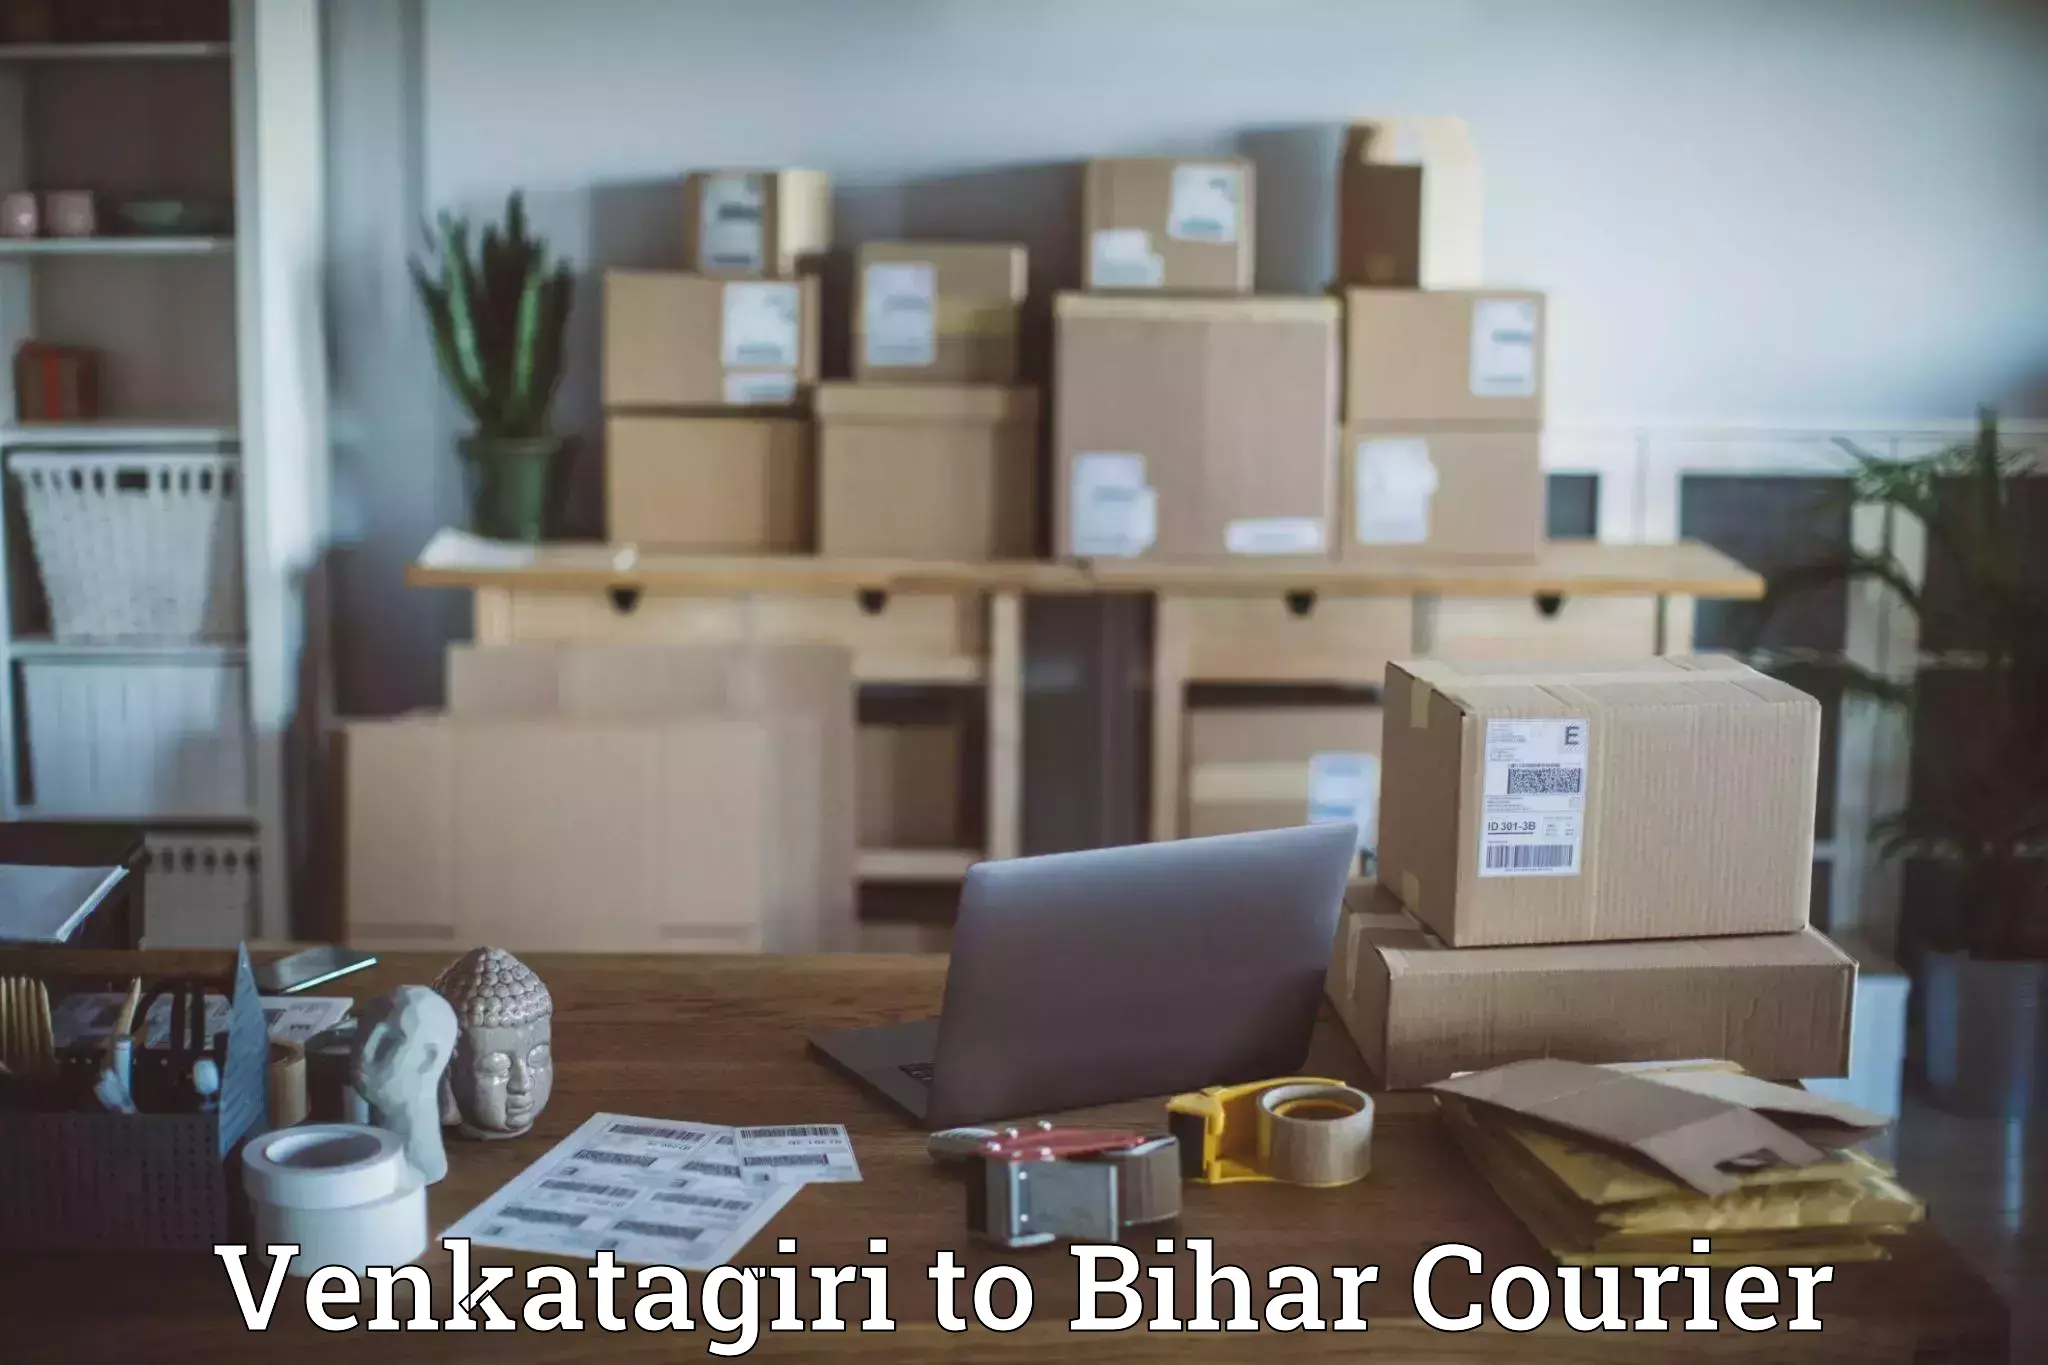 Customer-focused courier Venkatagiri to Fatwah